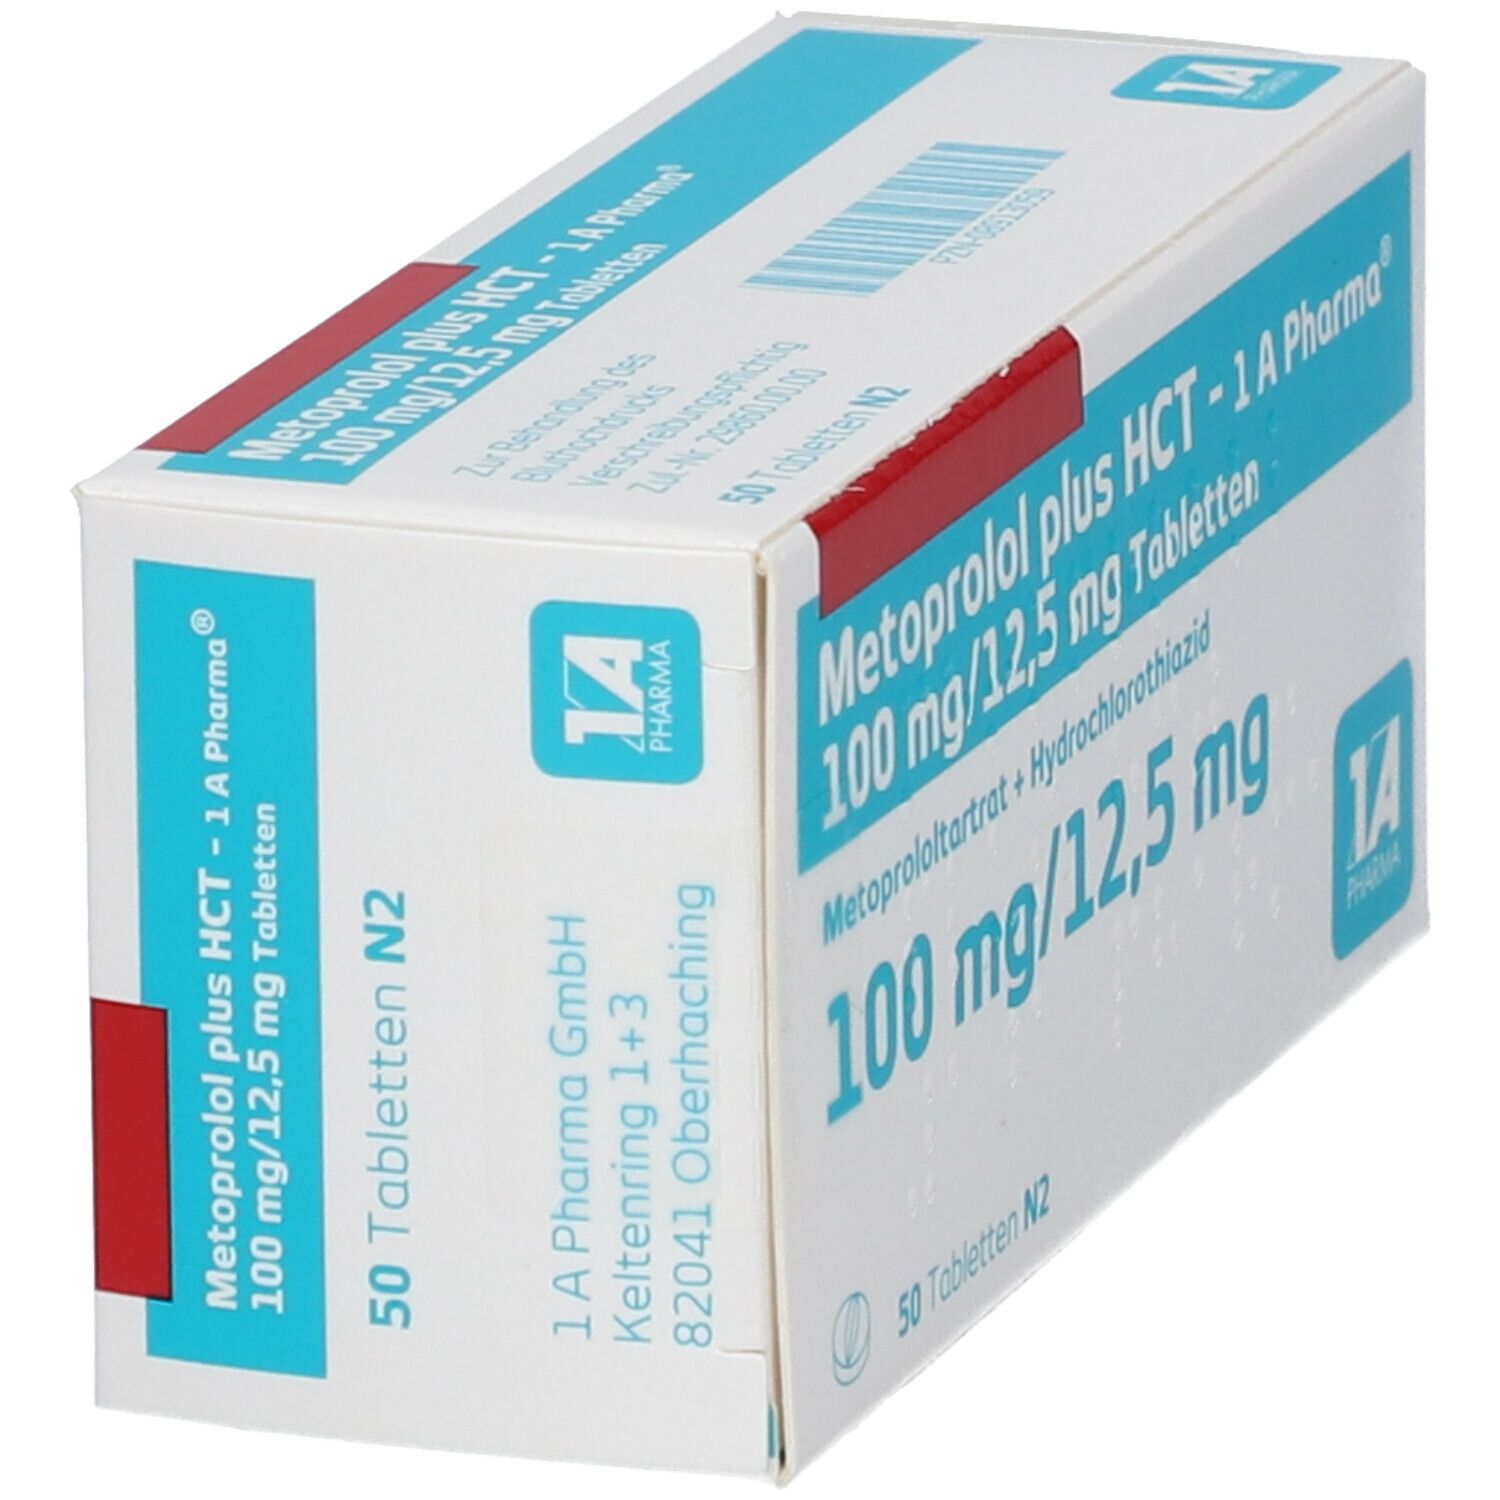 Metoprolol plus HCT - 1 A Pharma® 100 mg/12,5 mg